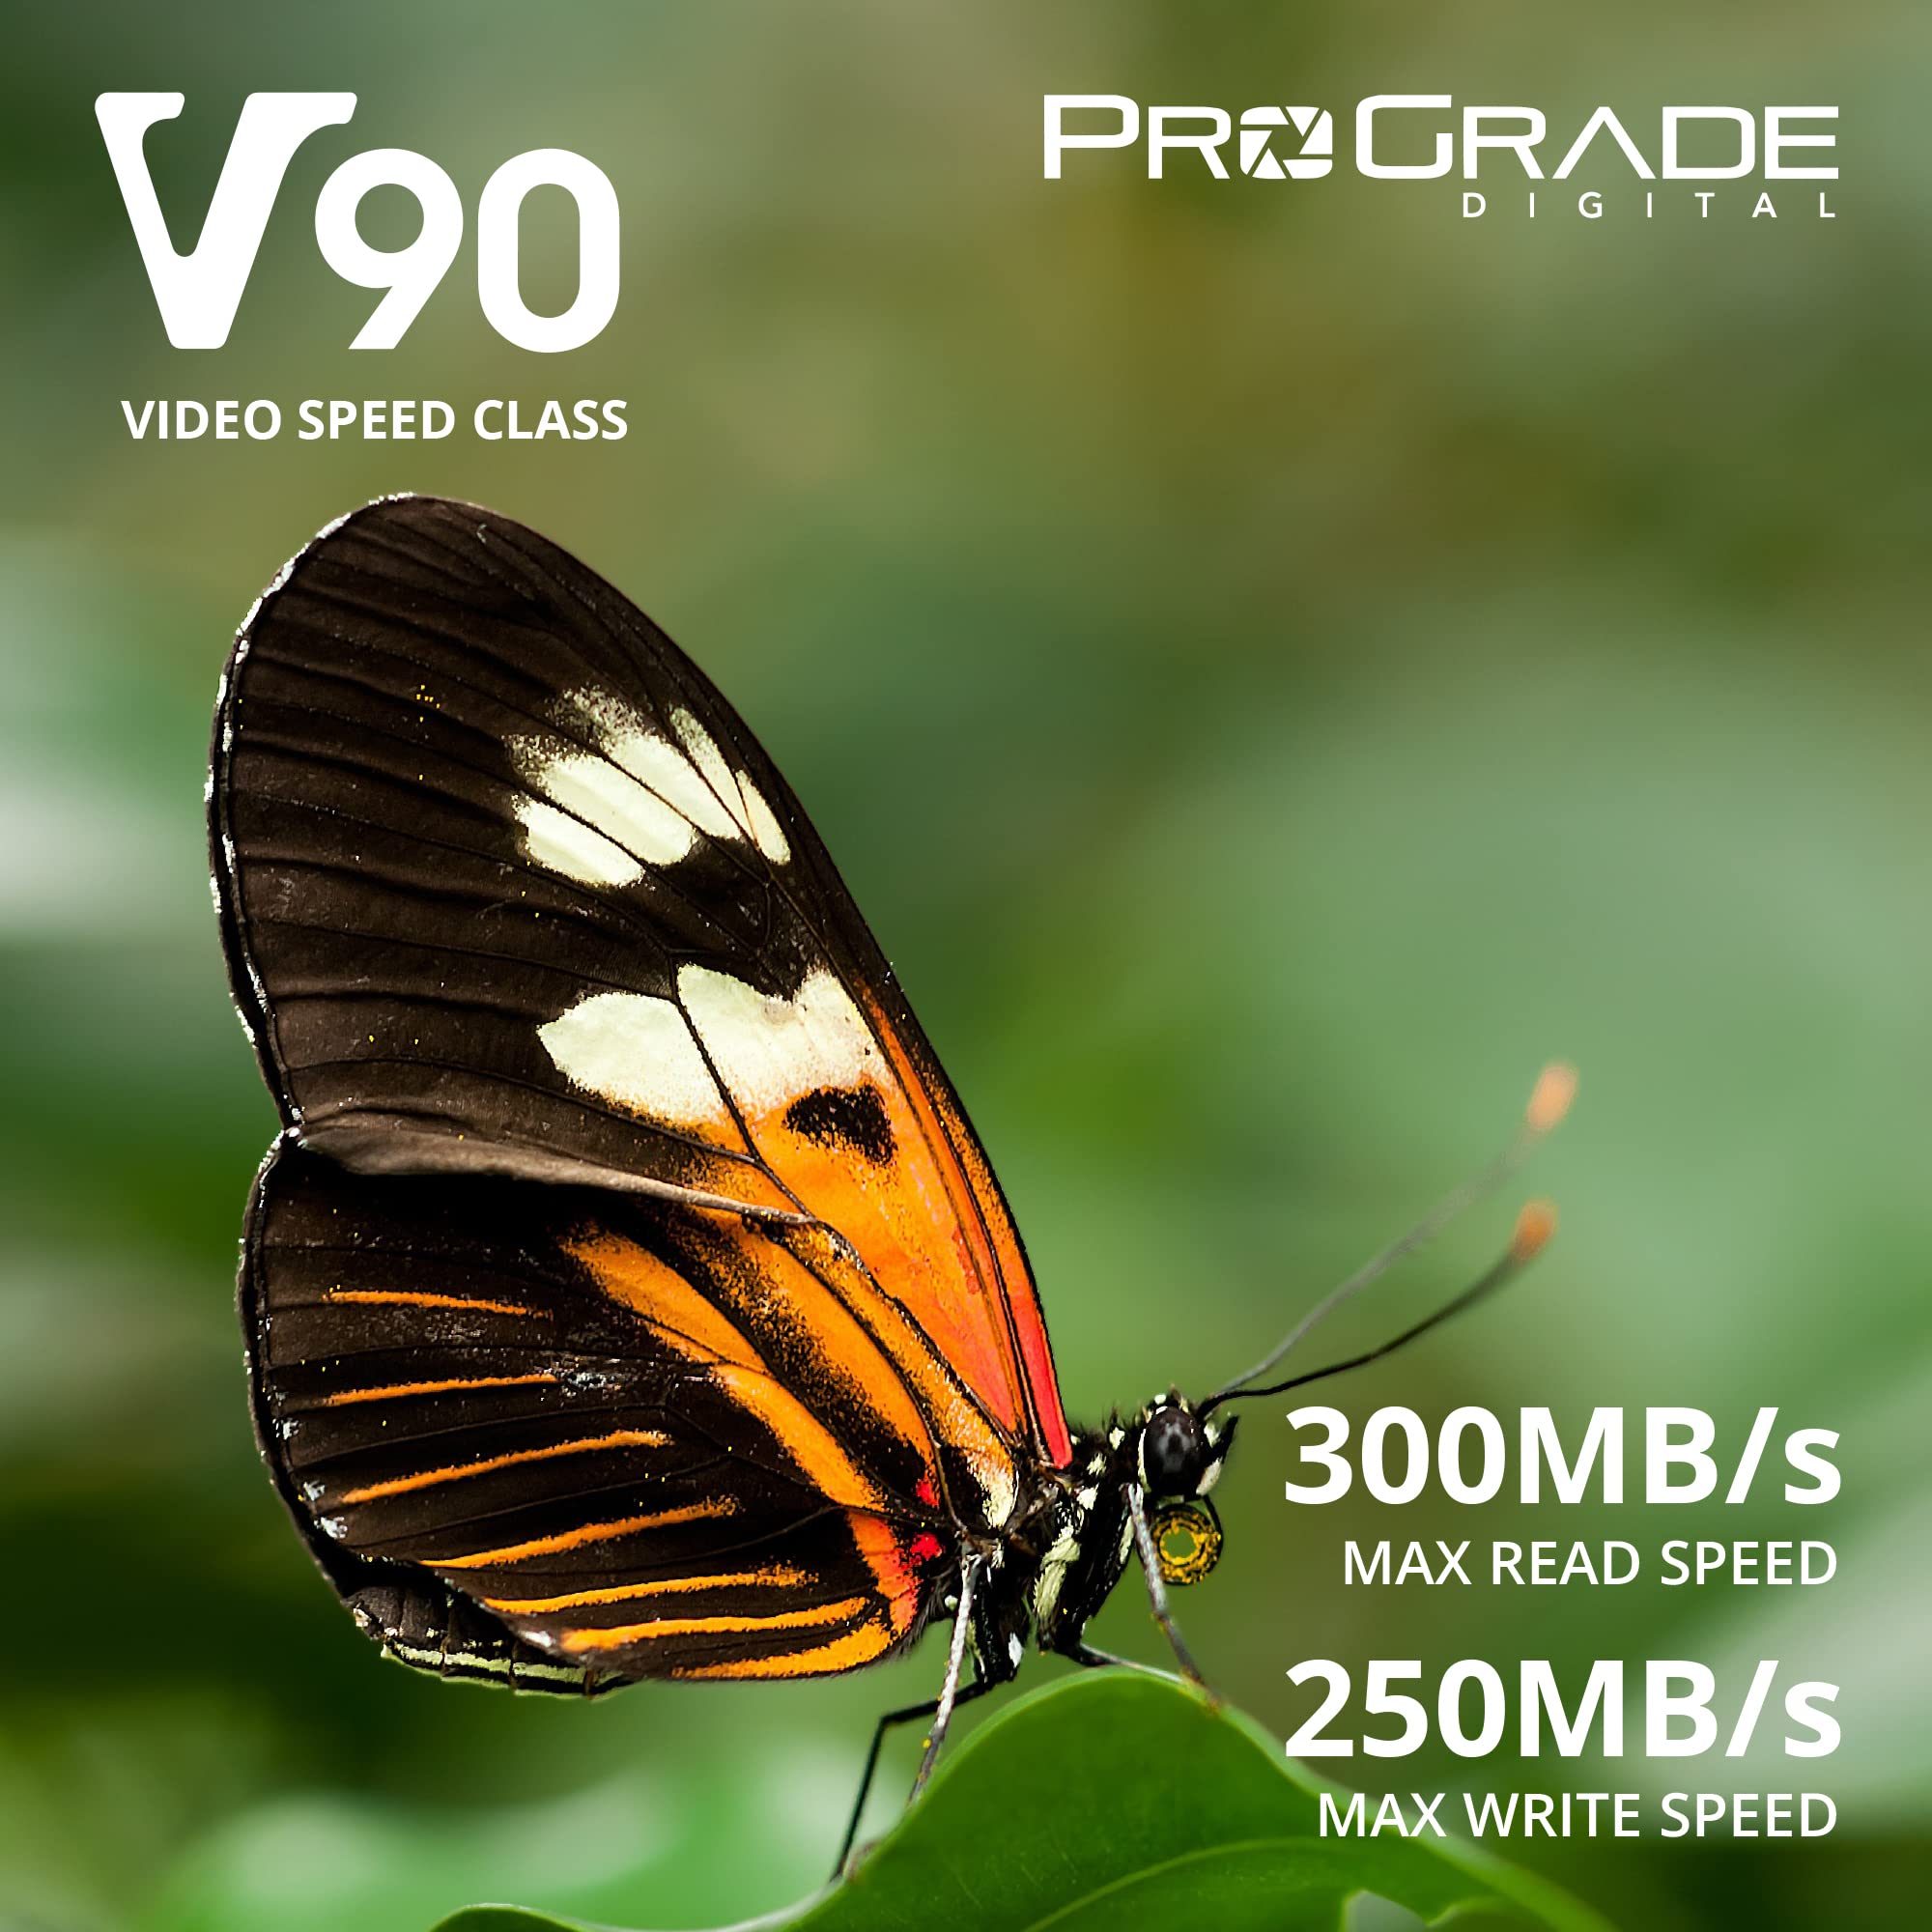 ProGrade Digital SDXC UHS-II V90 300R Memory Card (512GB)